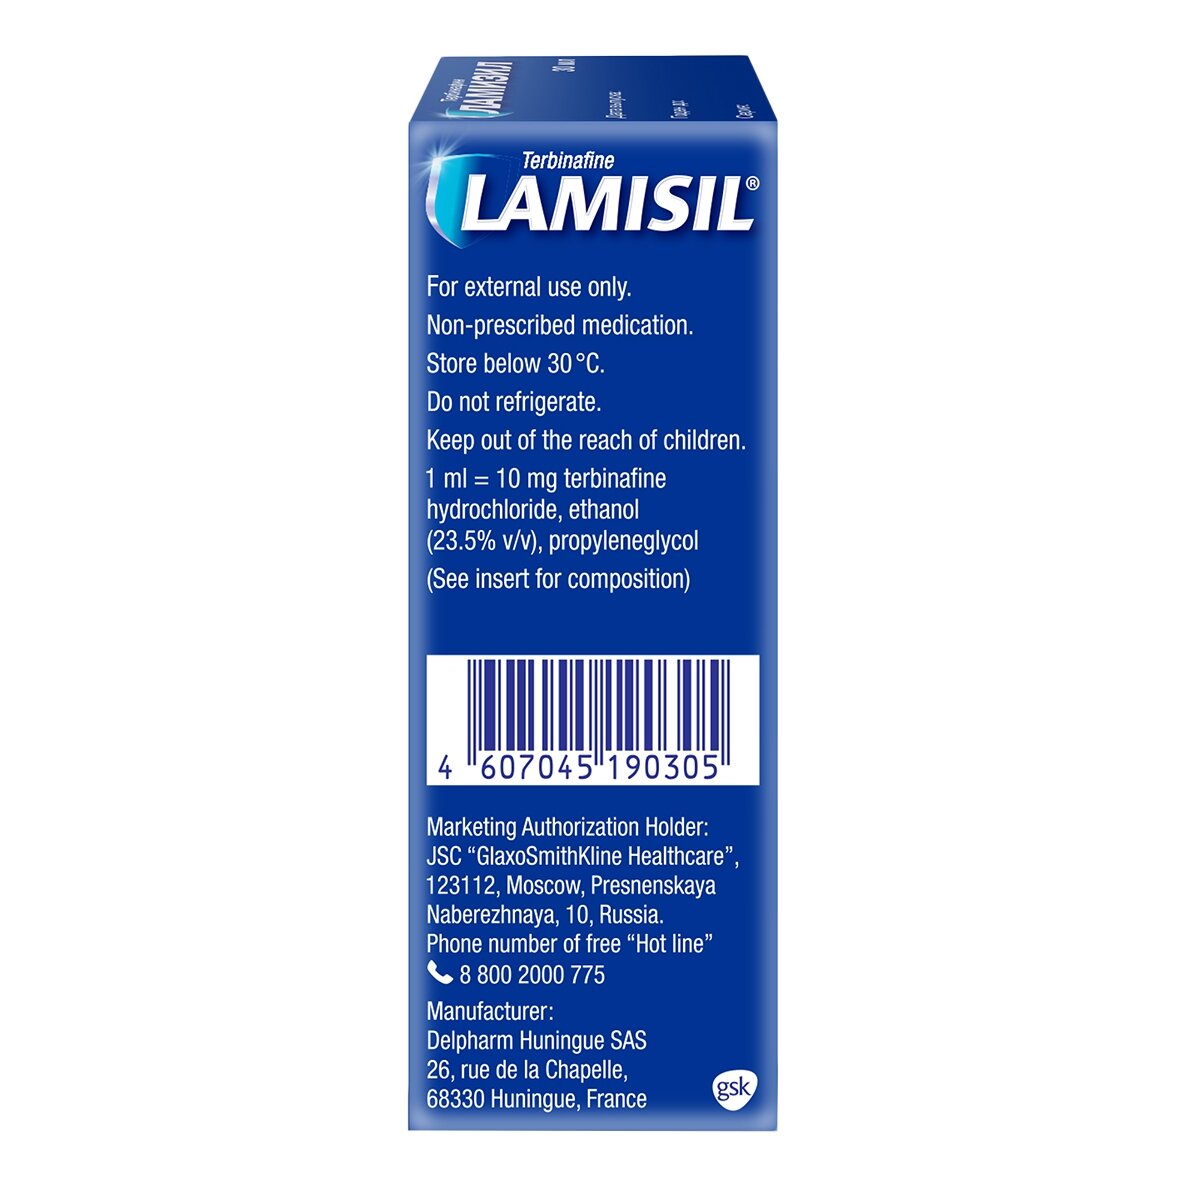 Ламизил спрей 1% флакон 30 мл